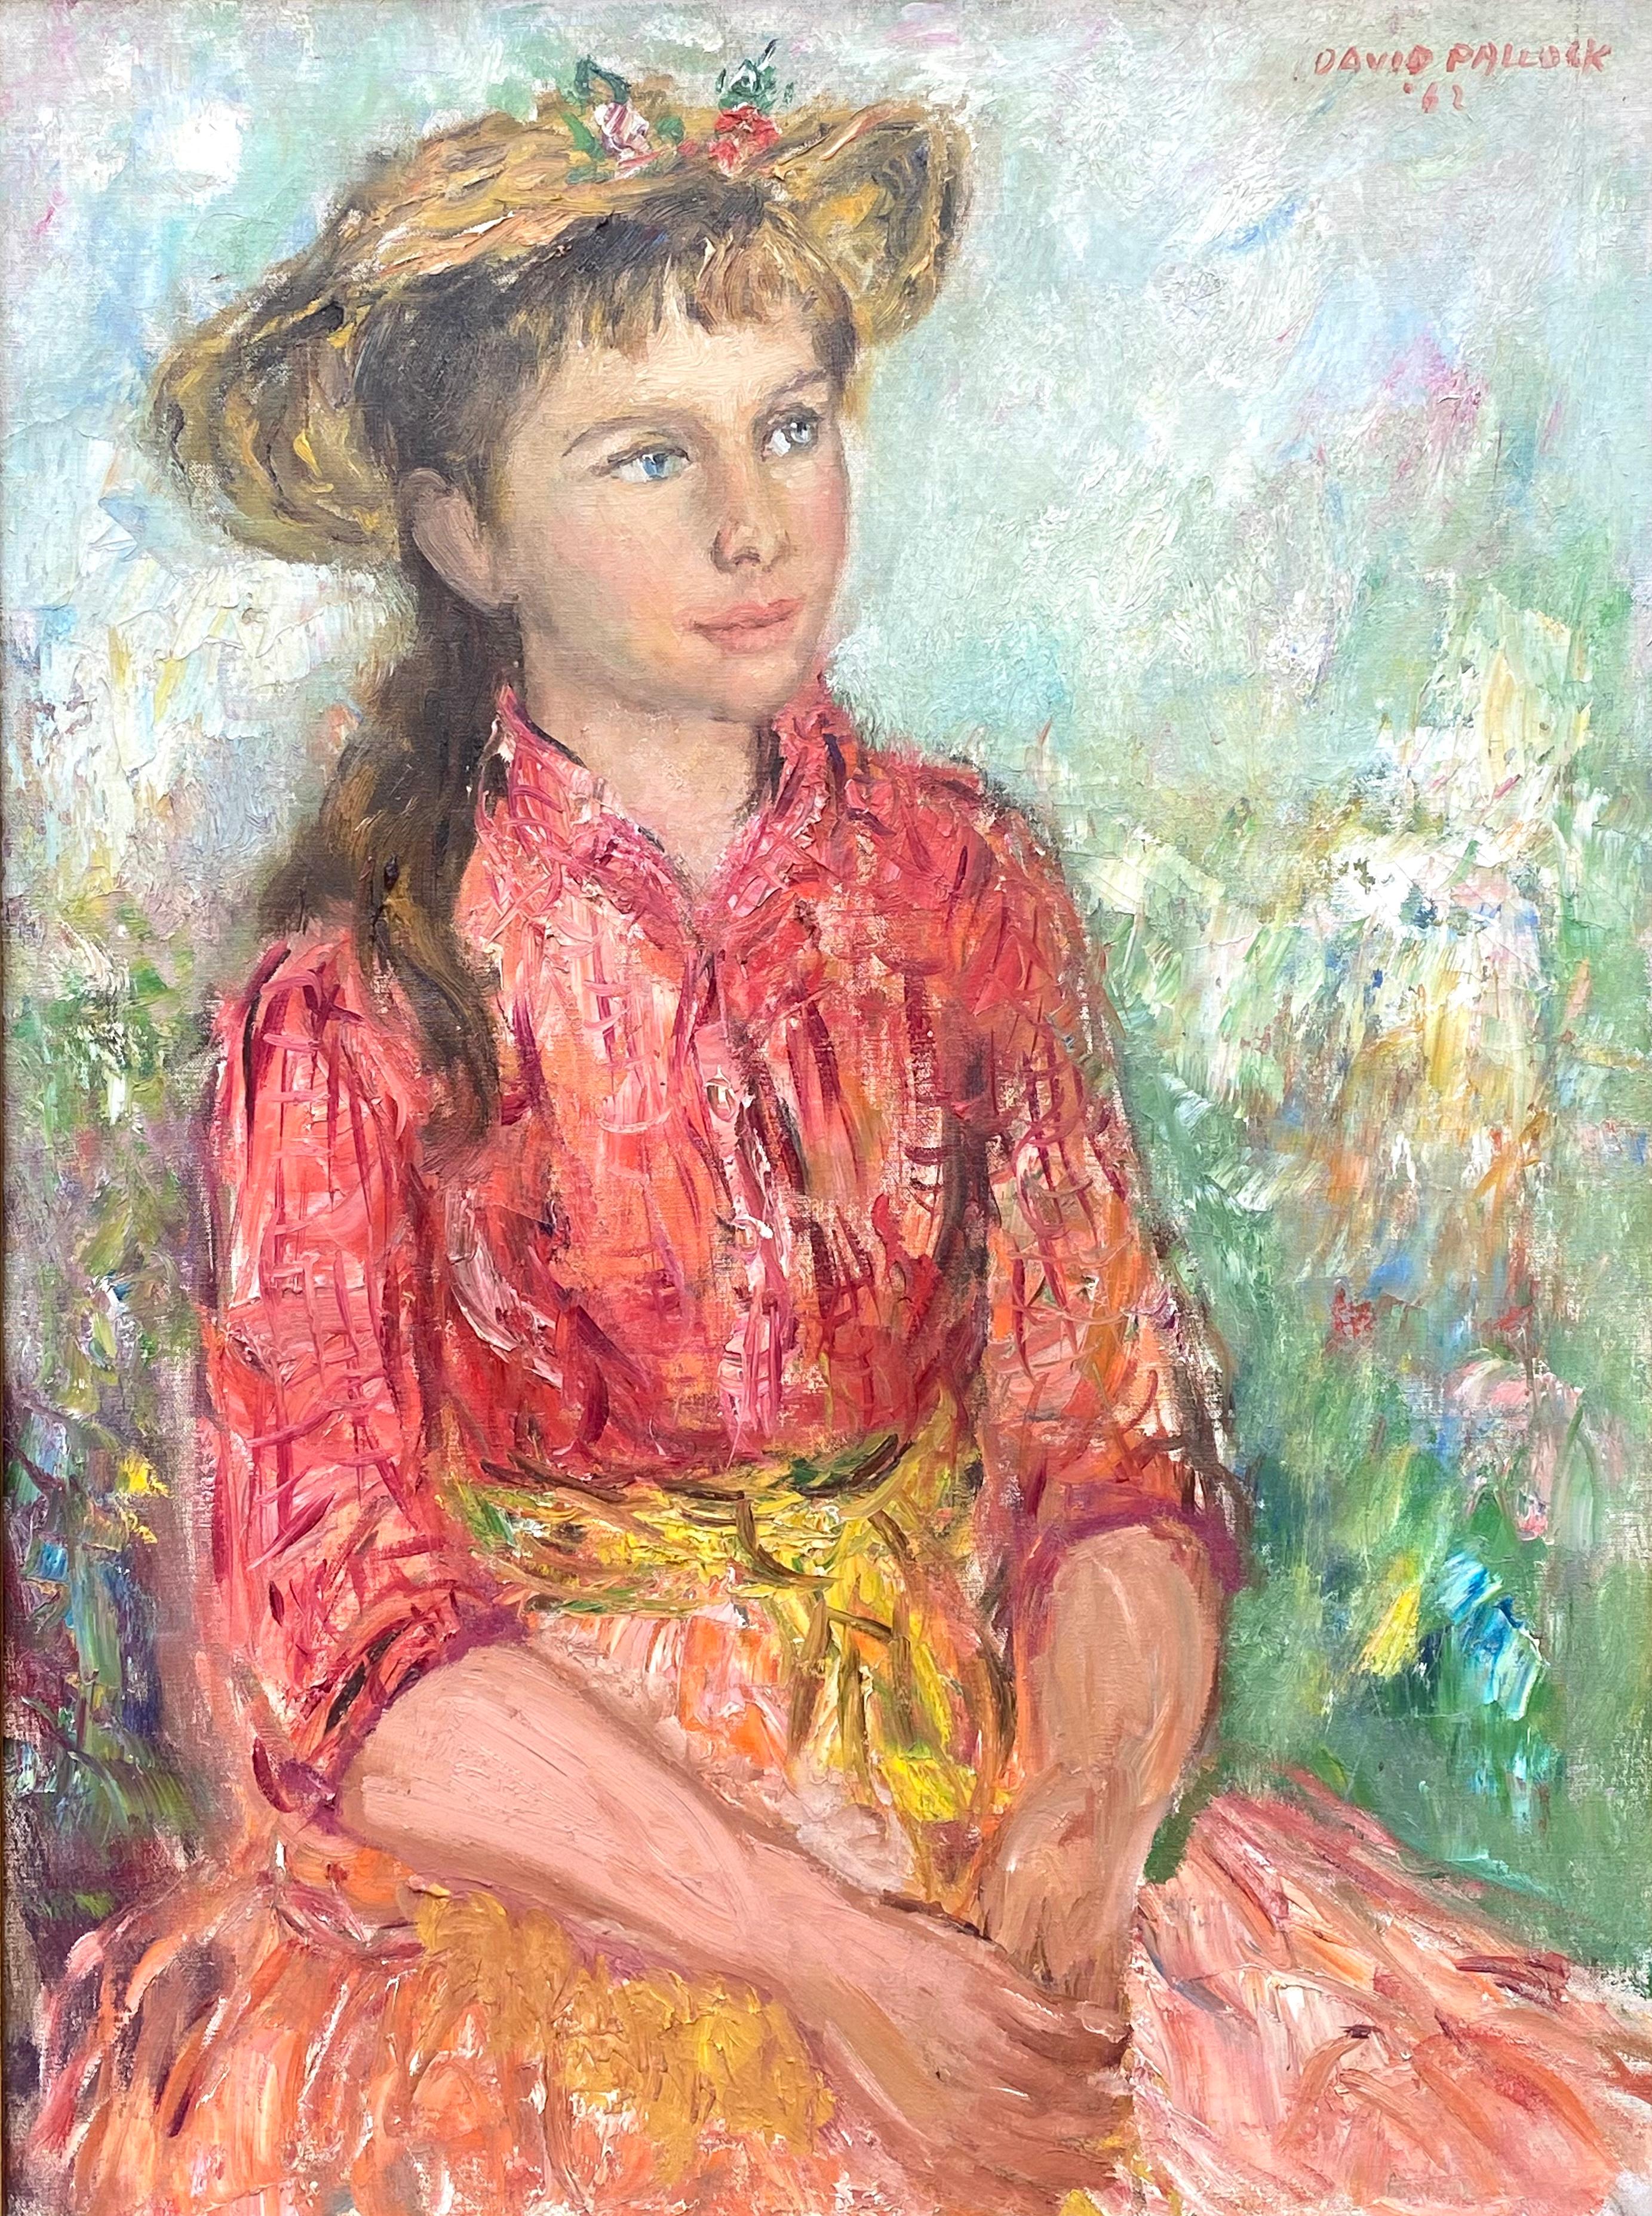 Portrait Painting David Pallock - Country Girl